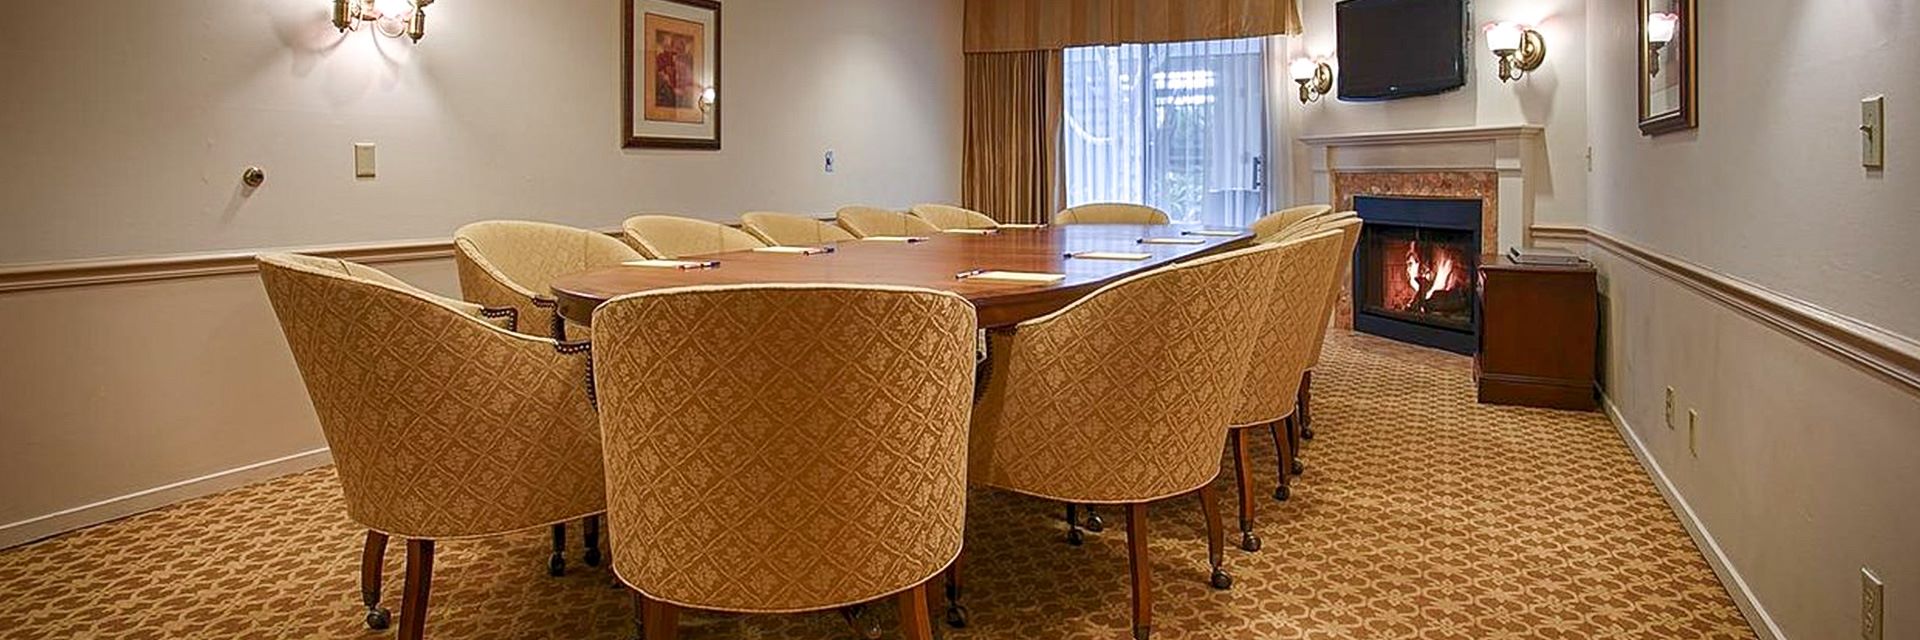 Meeting Room at Hotel Victorian Inn Monterey